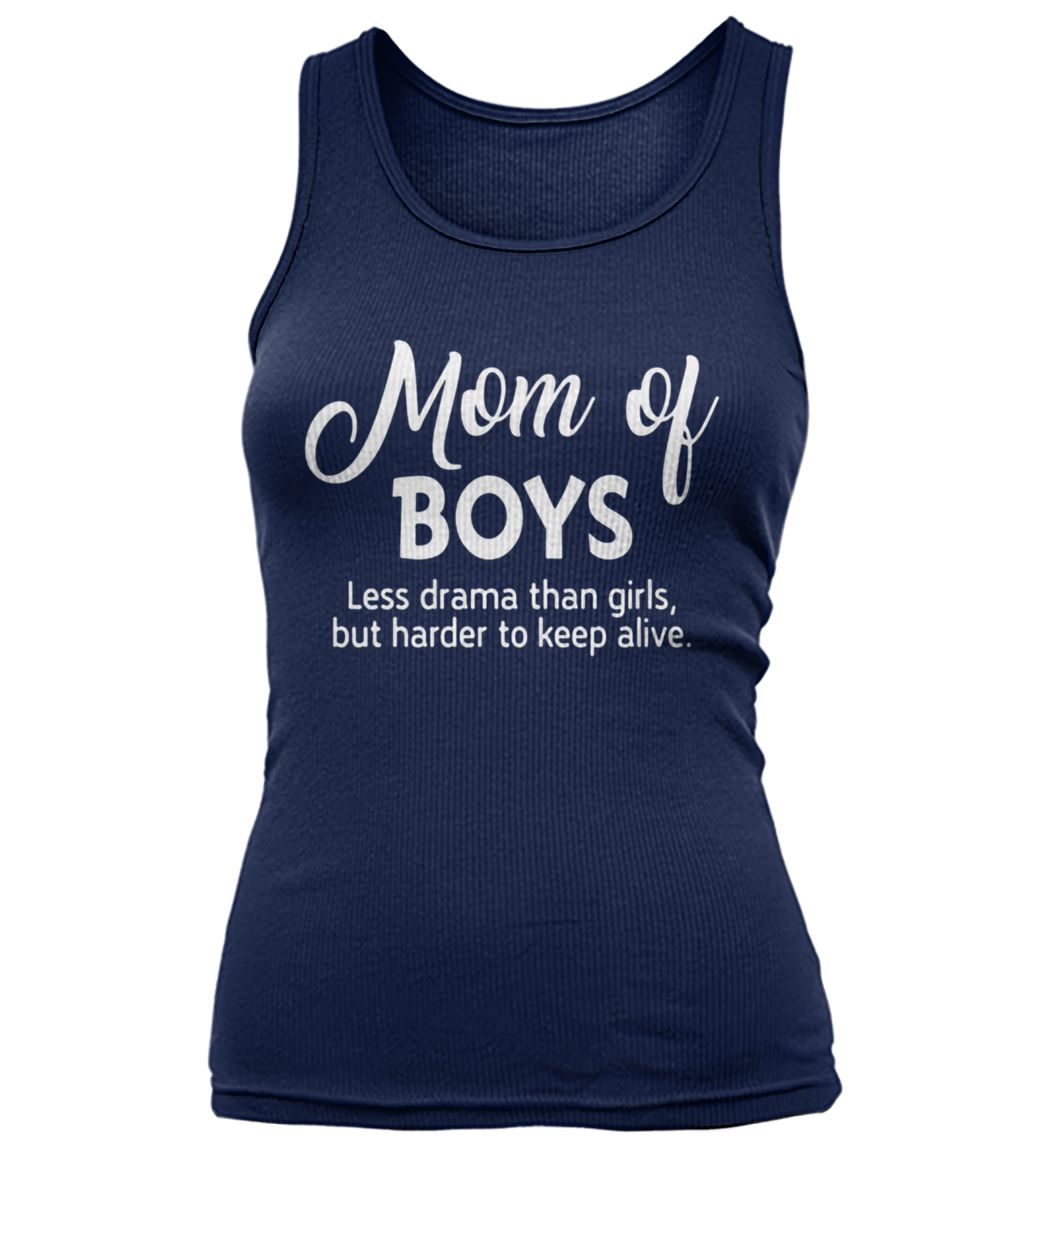 Mom of boys less drama than girls women's tank top